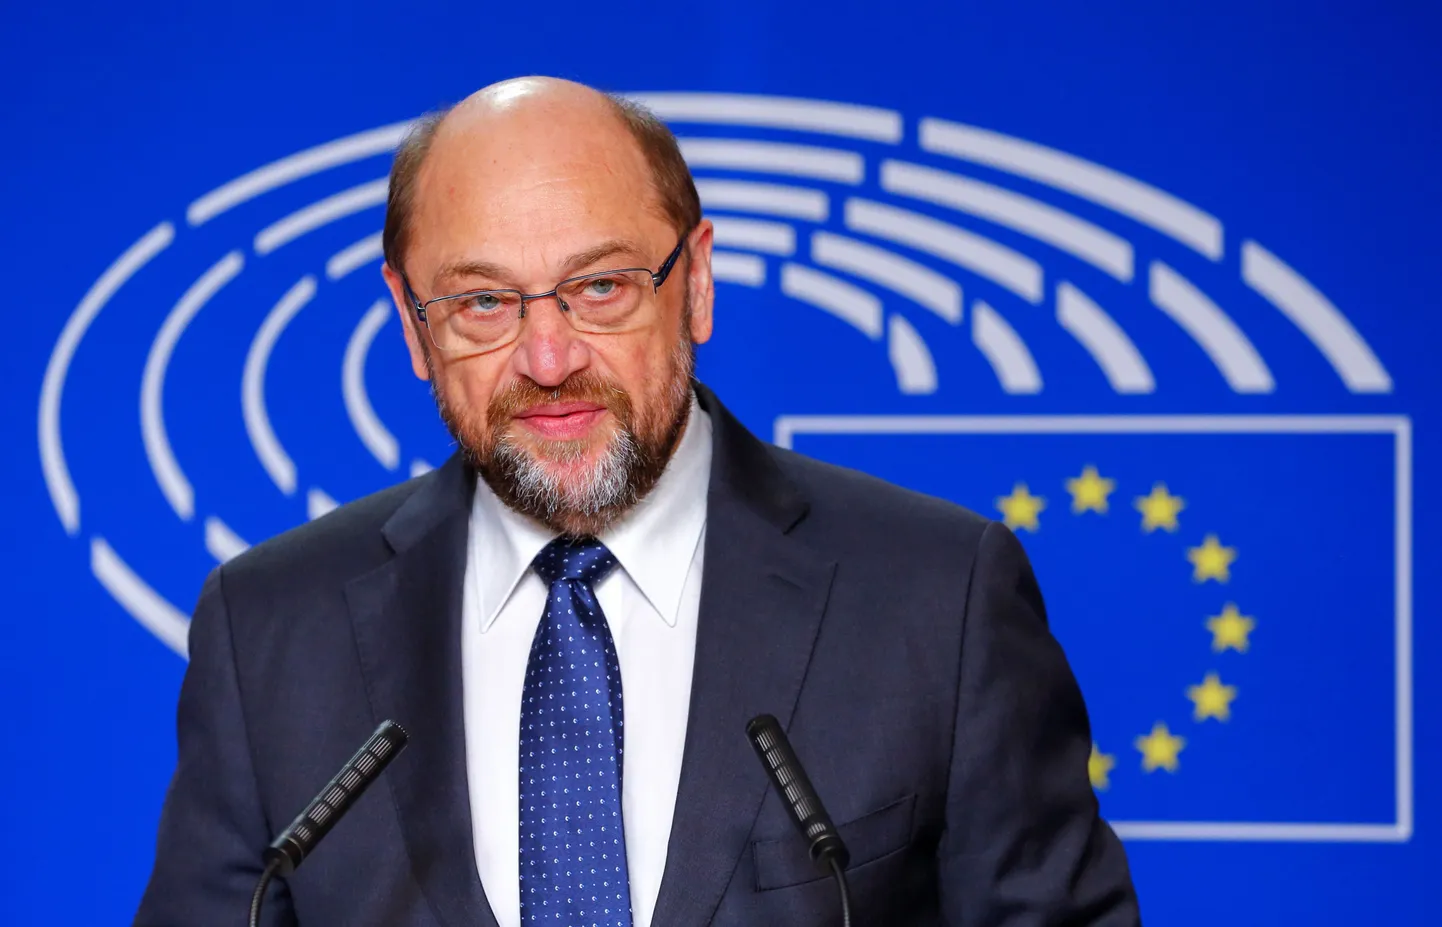 Saksa sotsiaaldemokraatlik partei uus juht, endine europarlamendi president Martin Schulz.